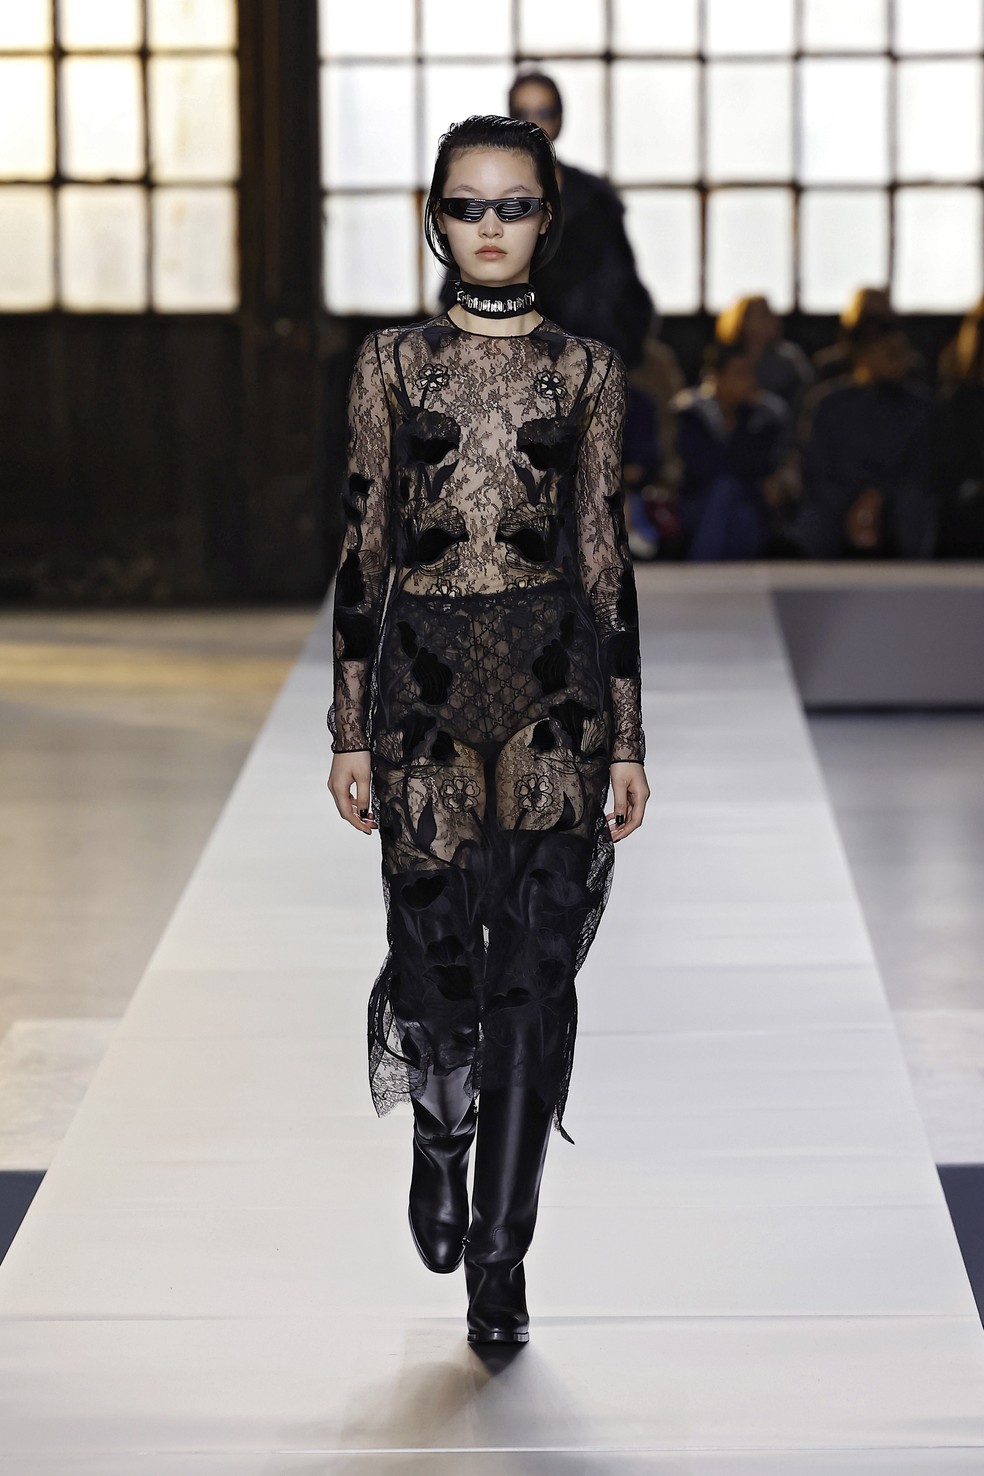 Novo estilista da Gucci é destaque na semana de moda de Milão